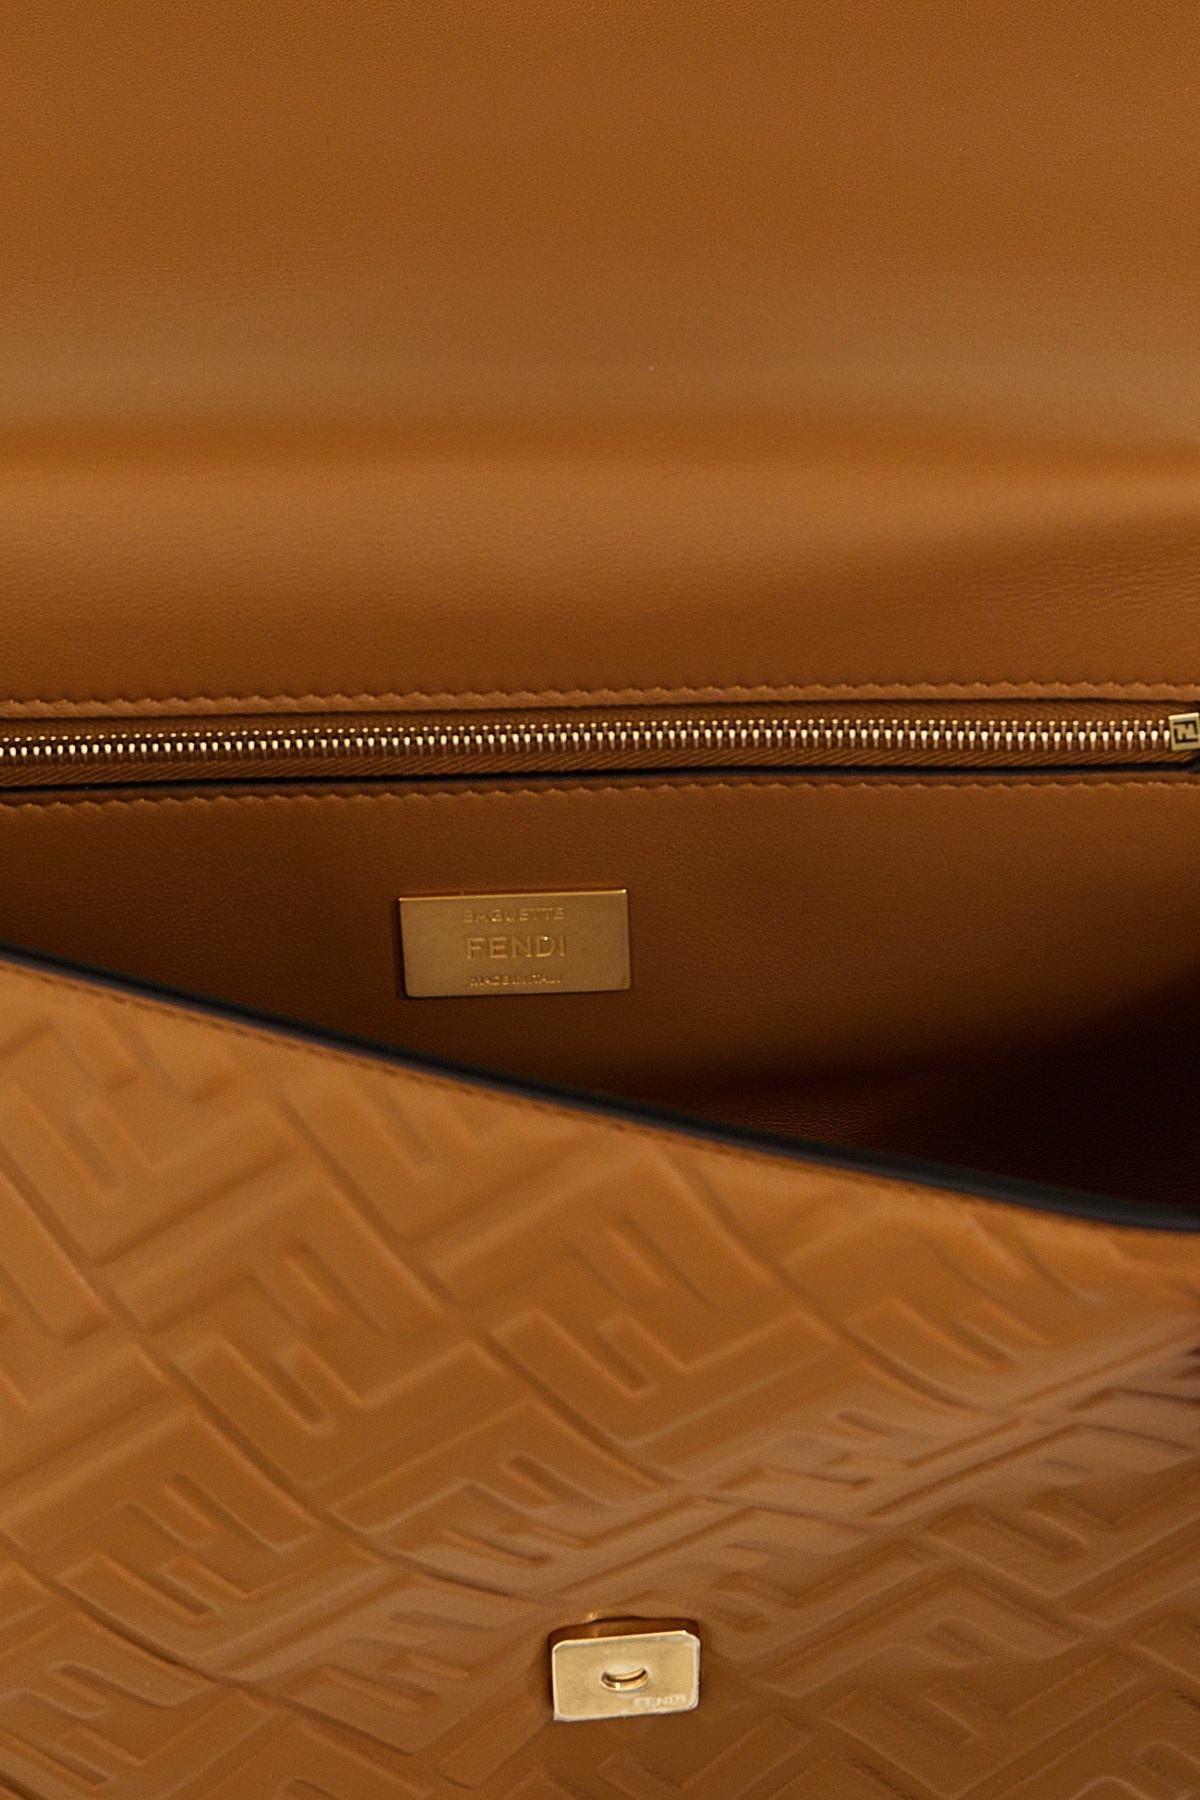 Fendi FF Embossed Leather Large Baguette Bag